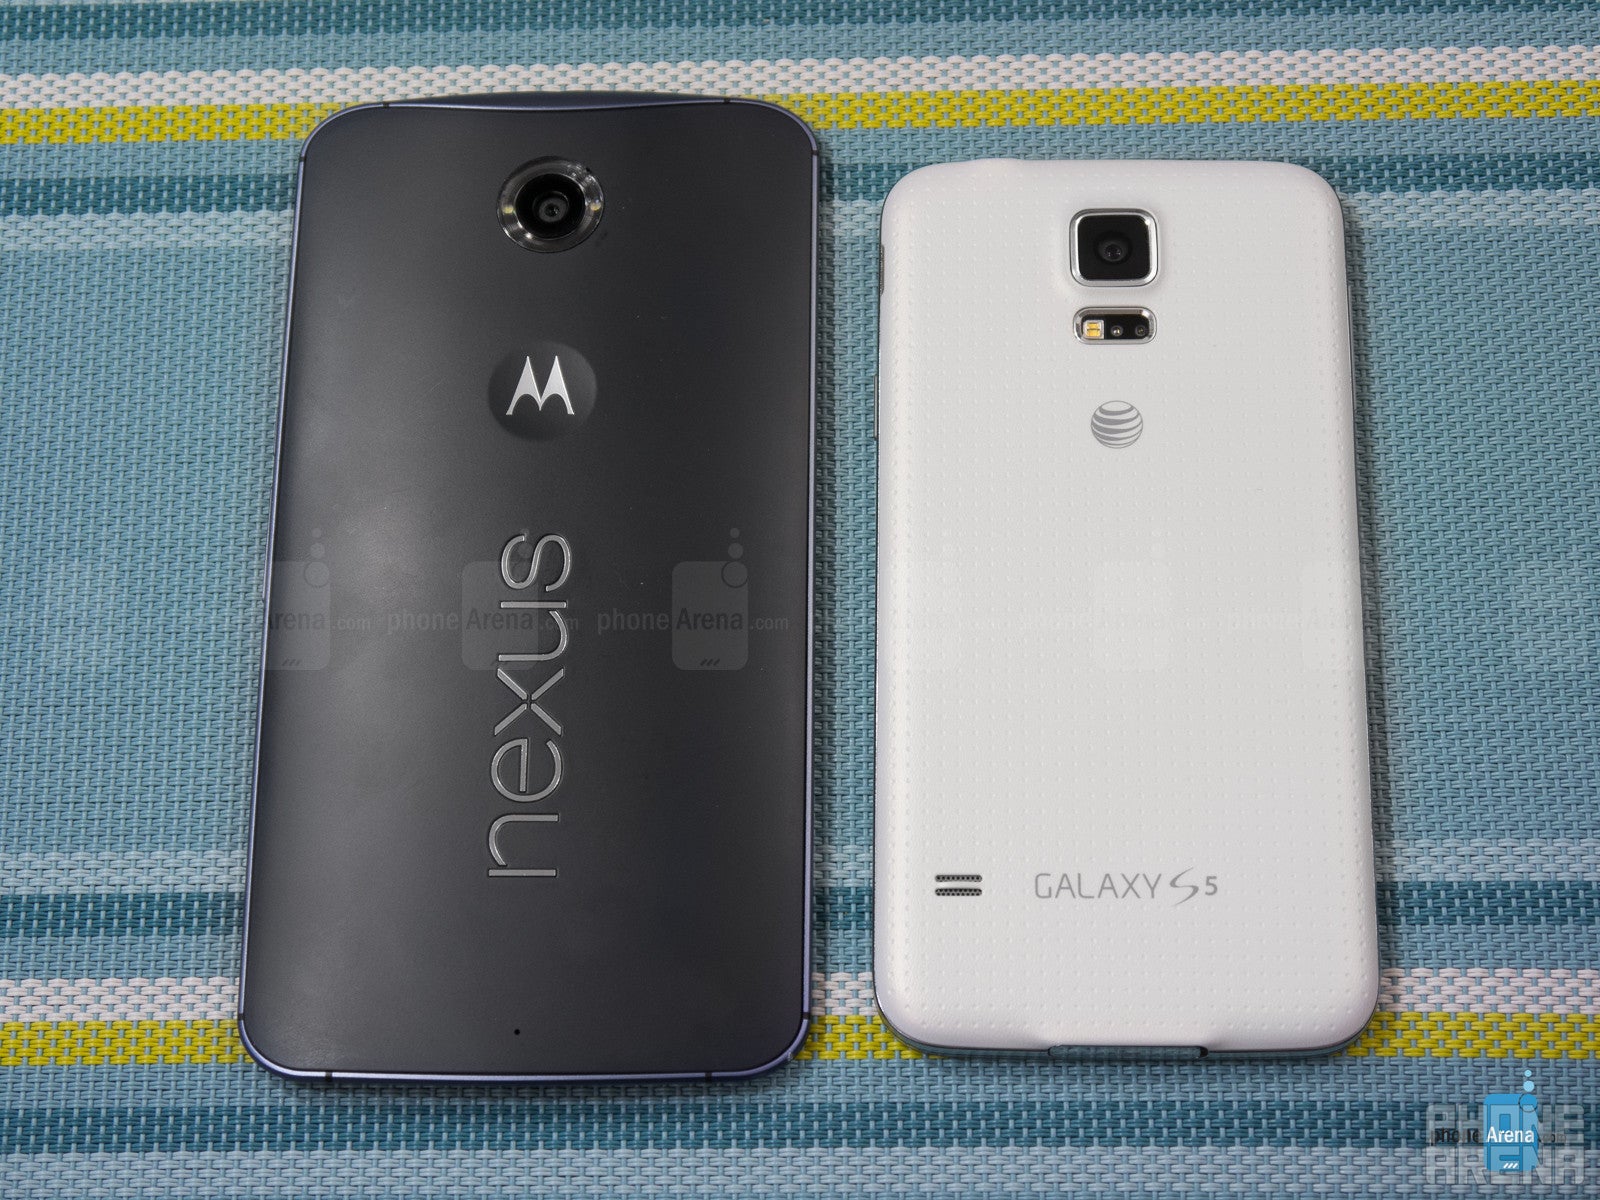 Google Nexus 6 vs Samsung Galaxy S5